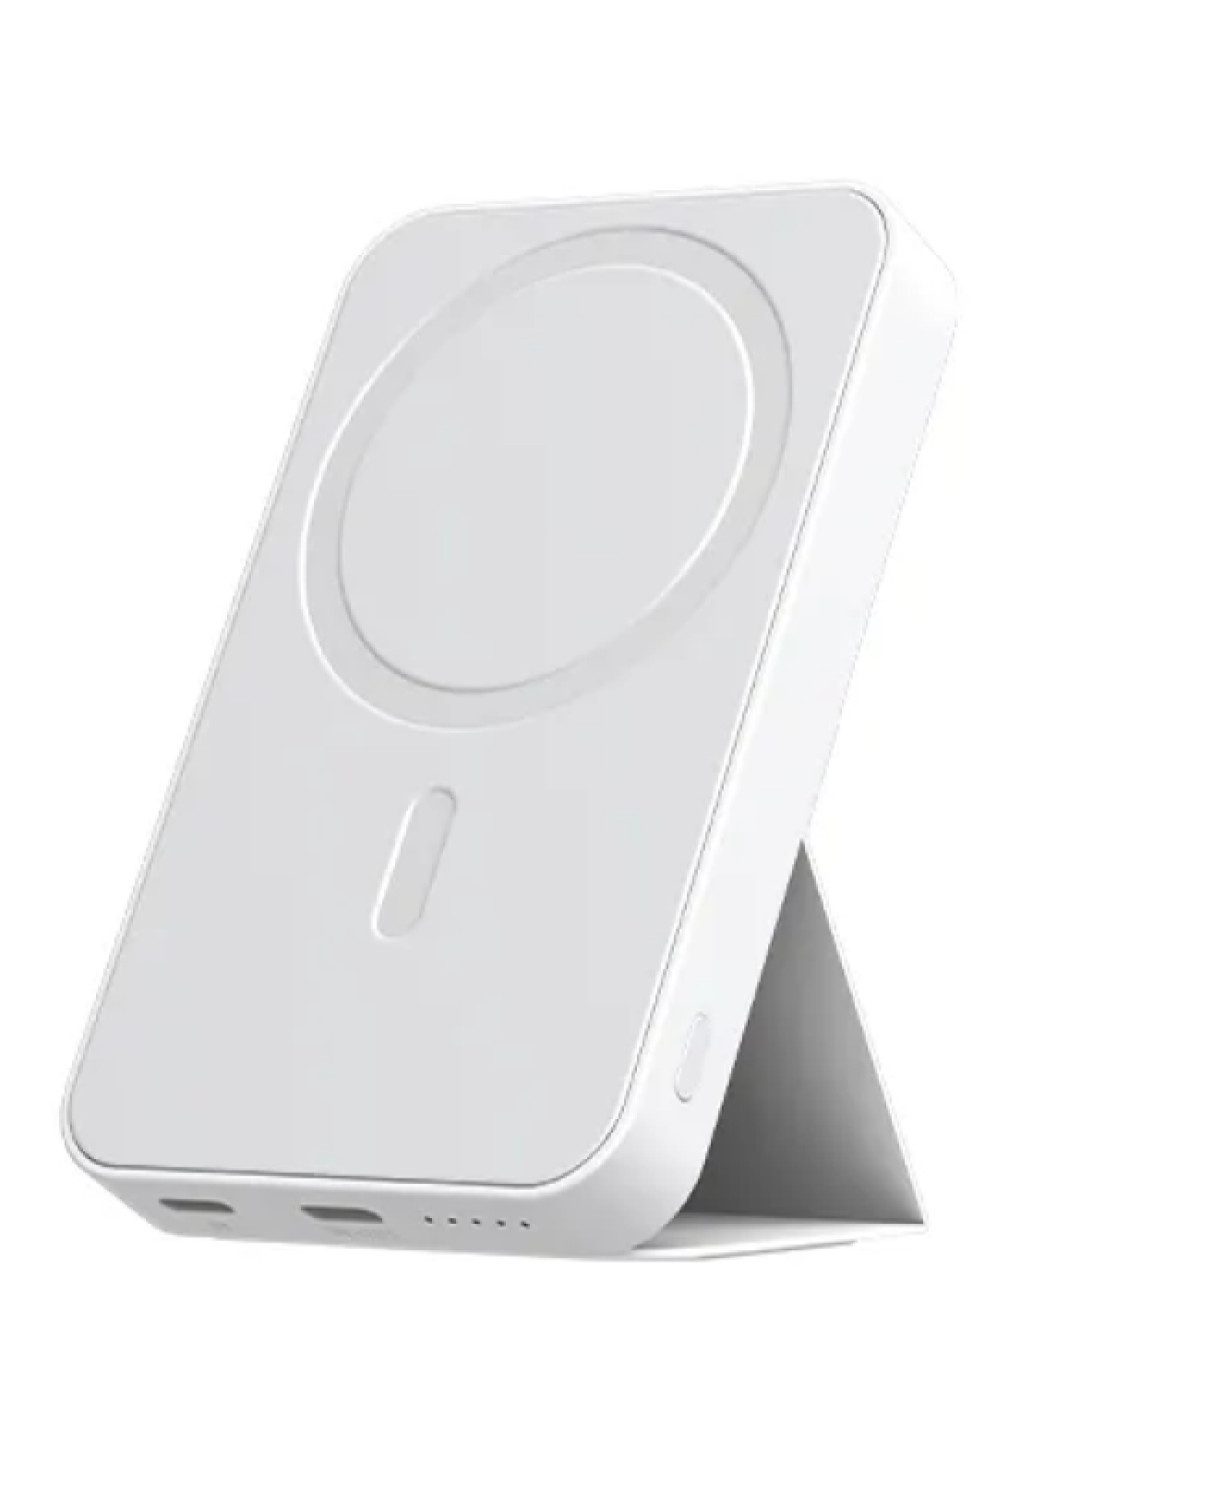 MAGNES Wireless Charger magsafe Powerbank 5000 mAh (12 V), Integrierte Handystütze und Magnetring für iPhone 12-15